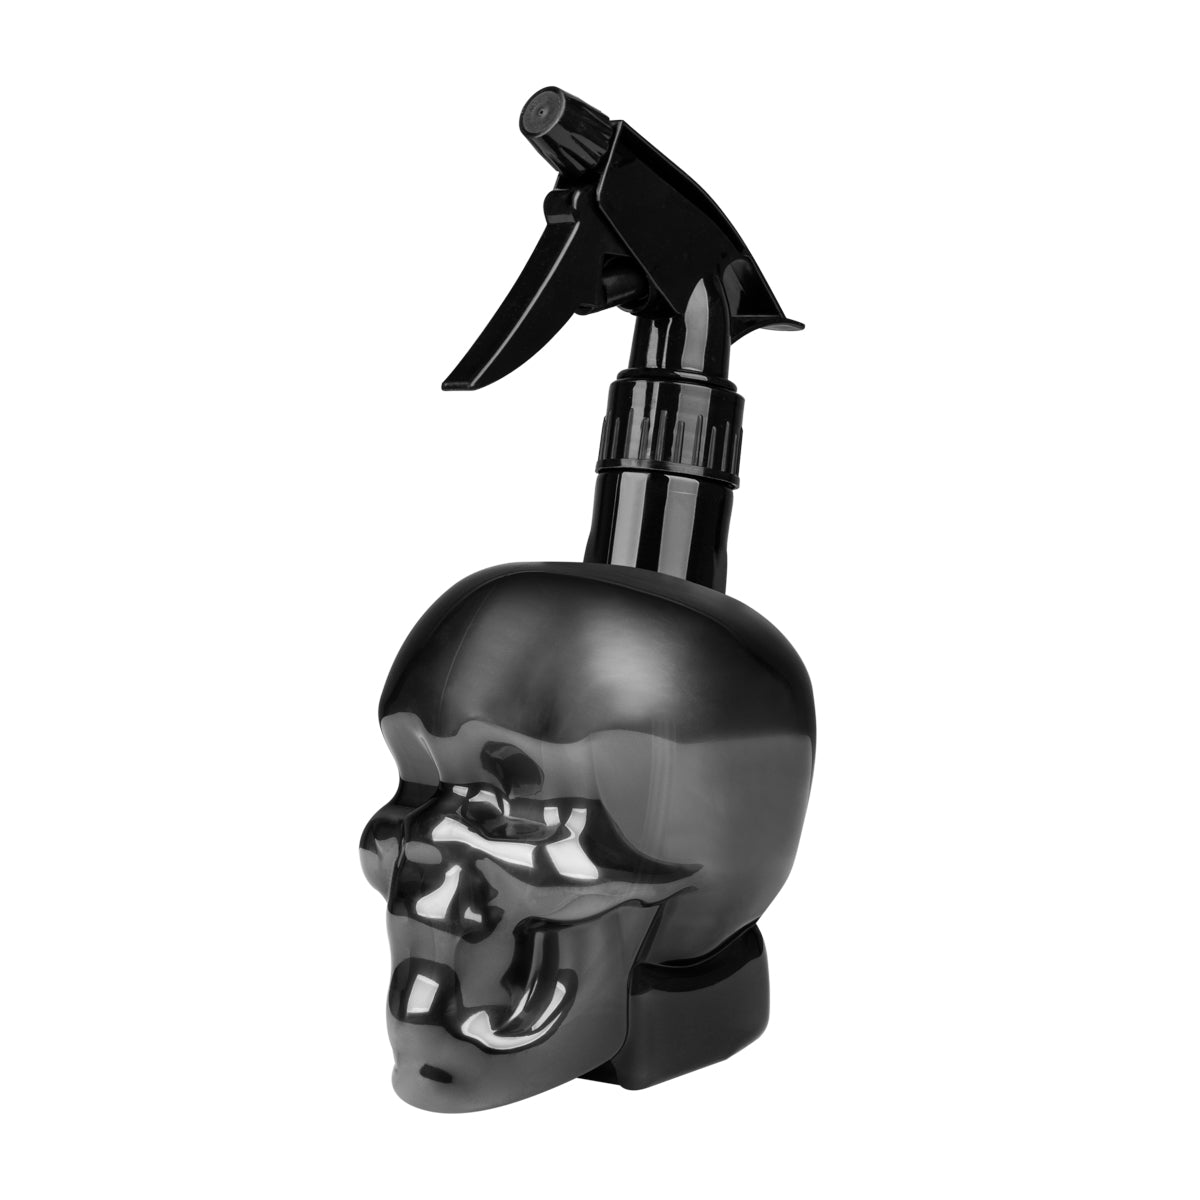 ACTIVESHOP Hairdressing sprayer skull 500ml